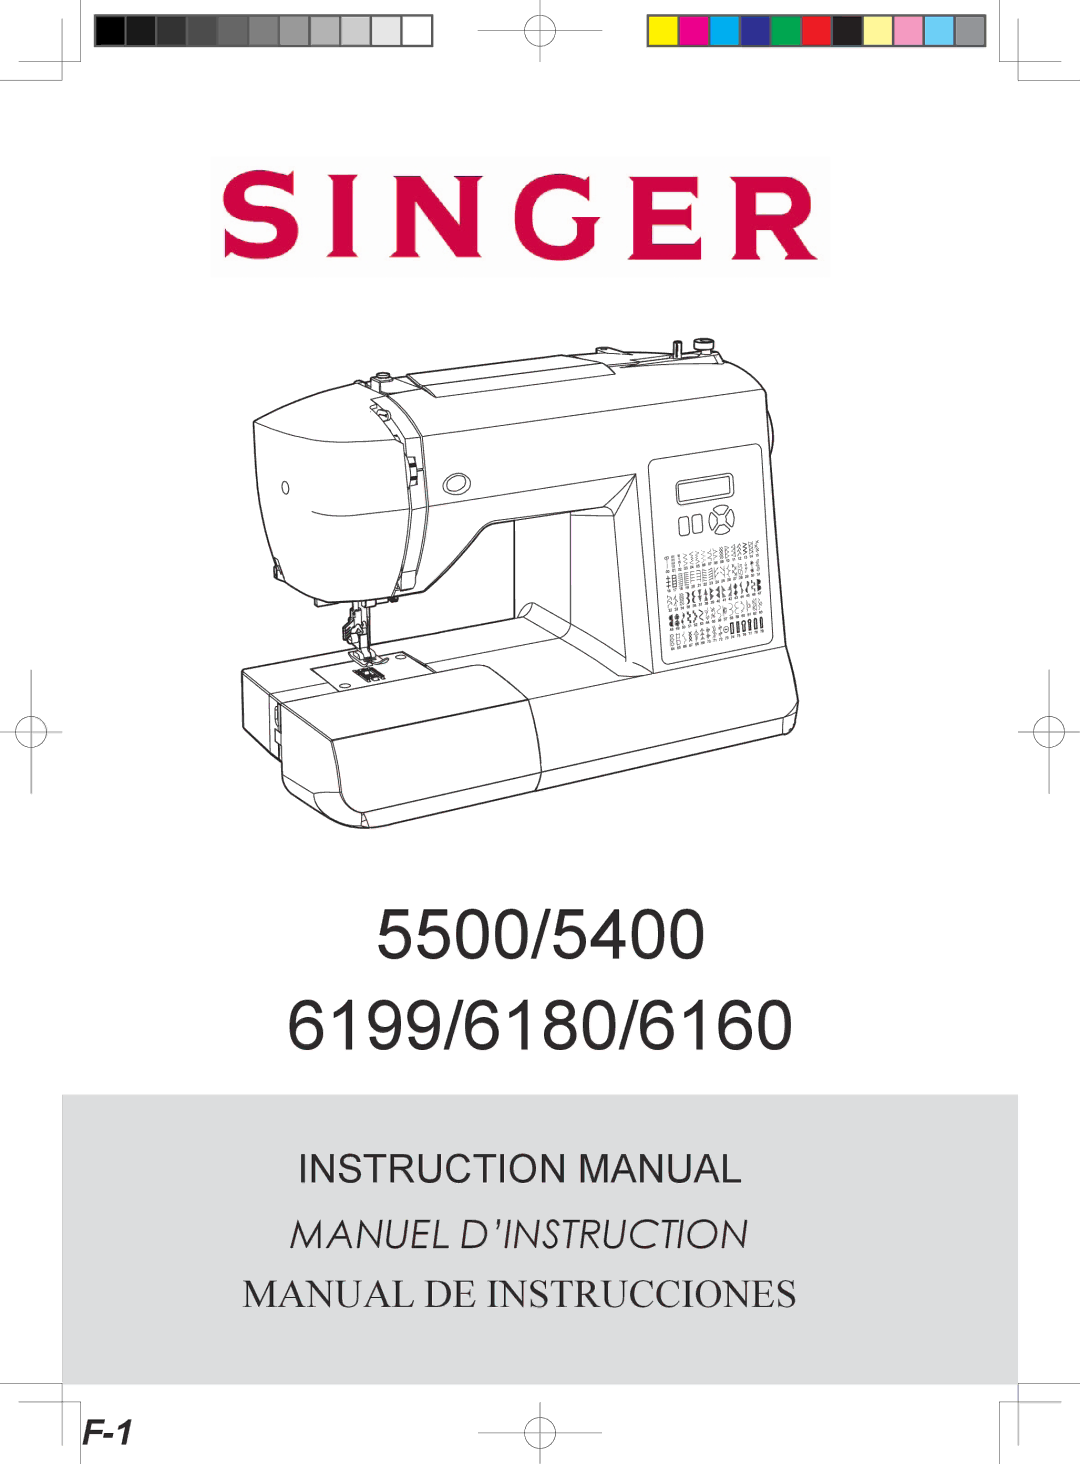 Singer instruction manual 5500/5400 6199/6180/6160 